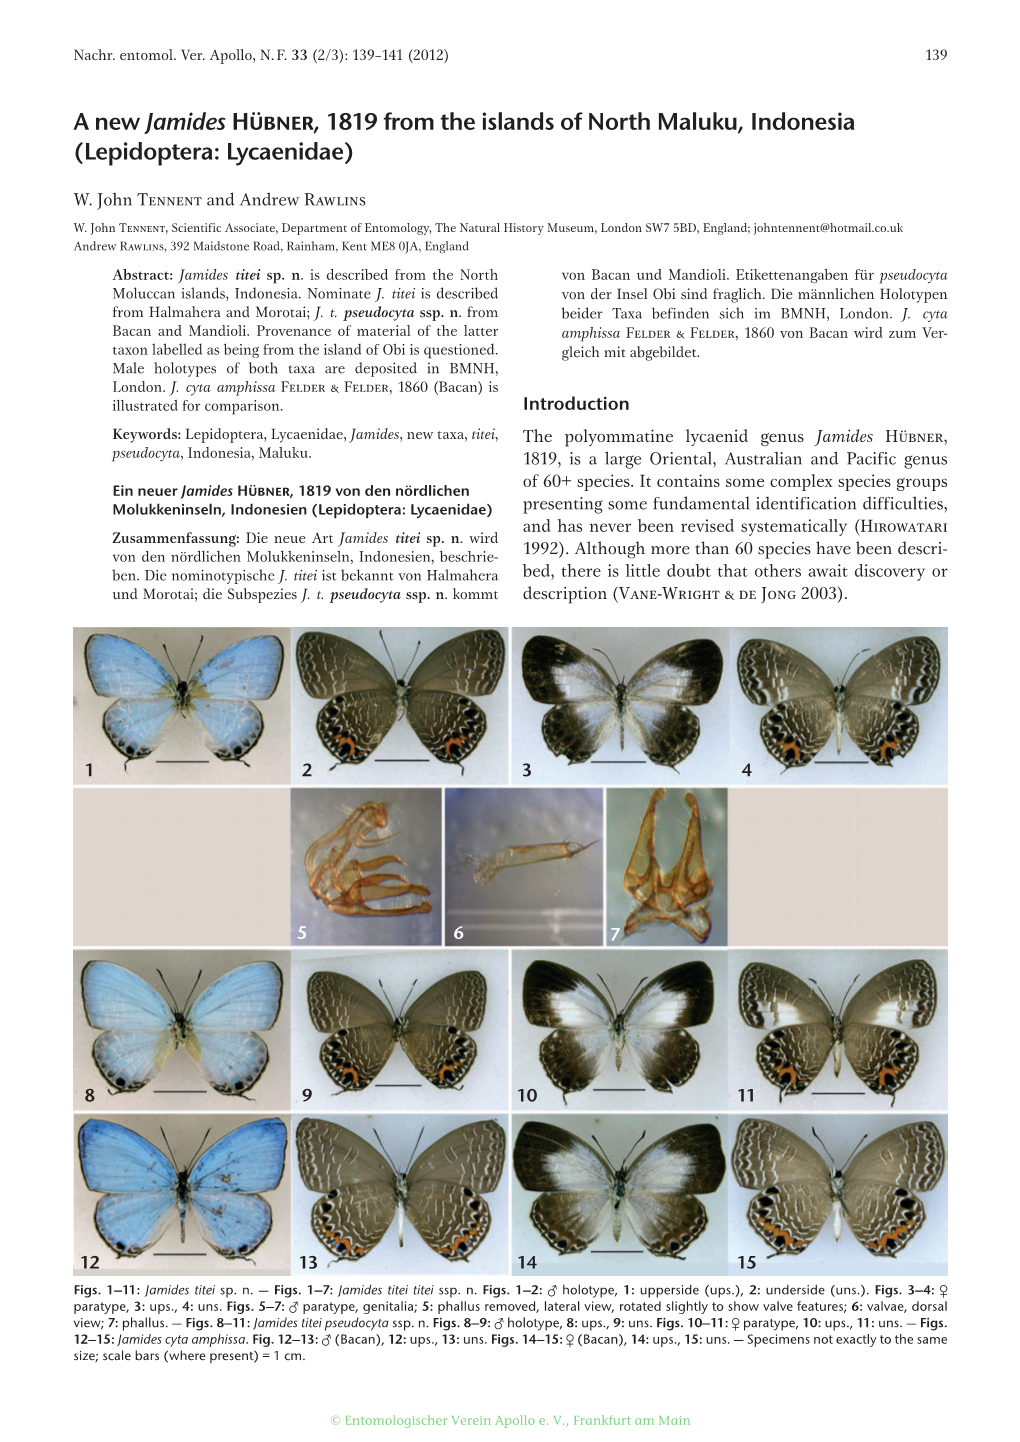 Lepidoptera: Lycaenidae)